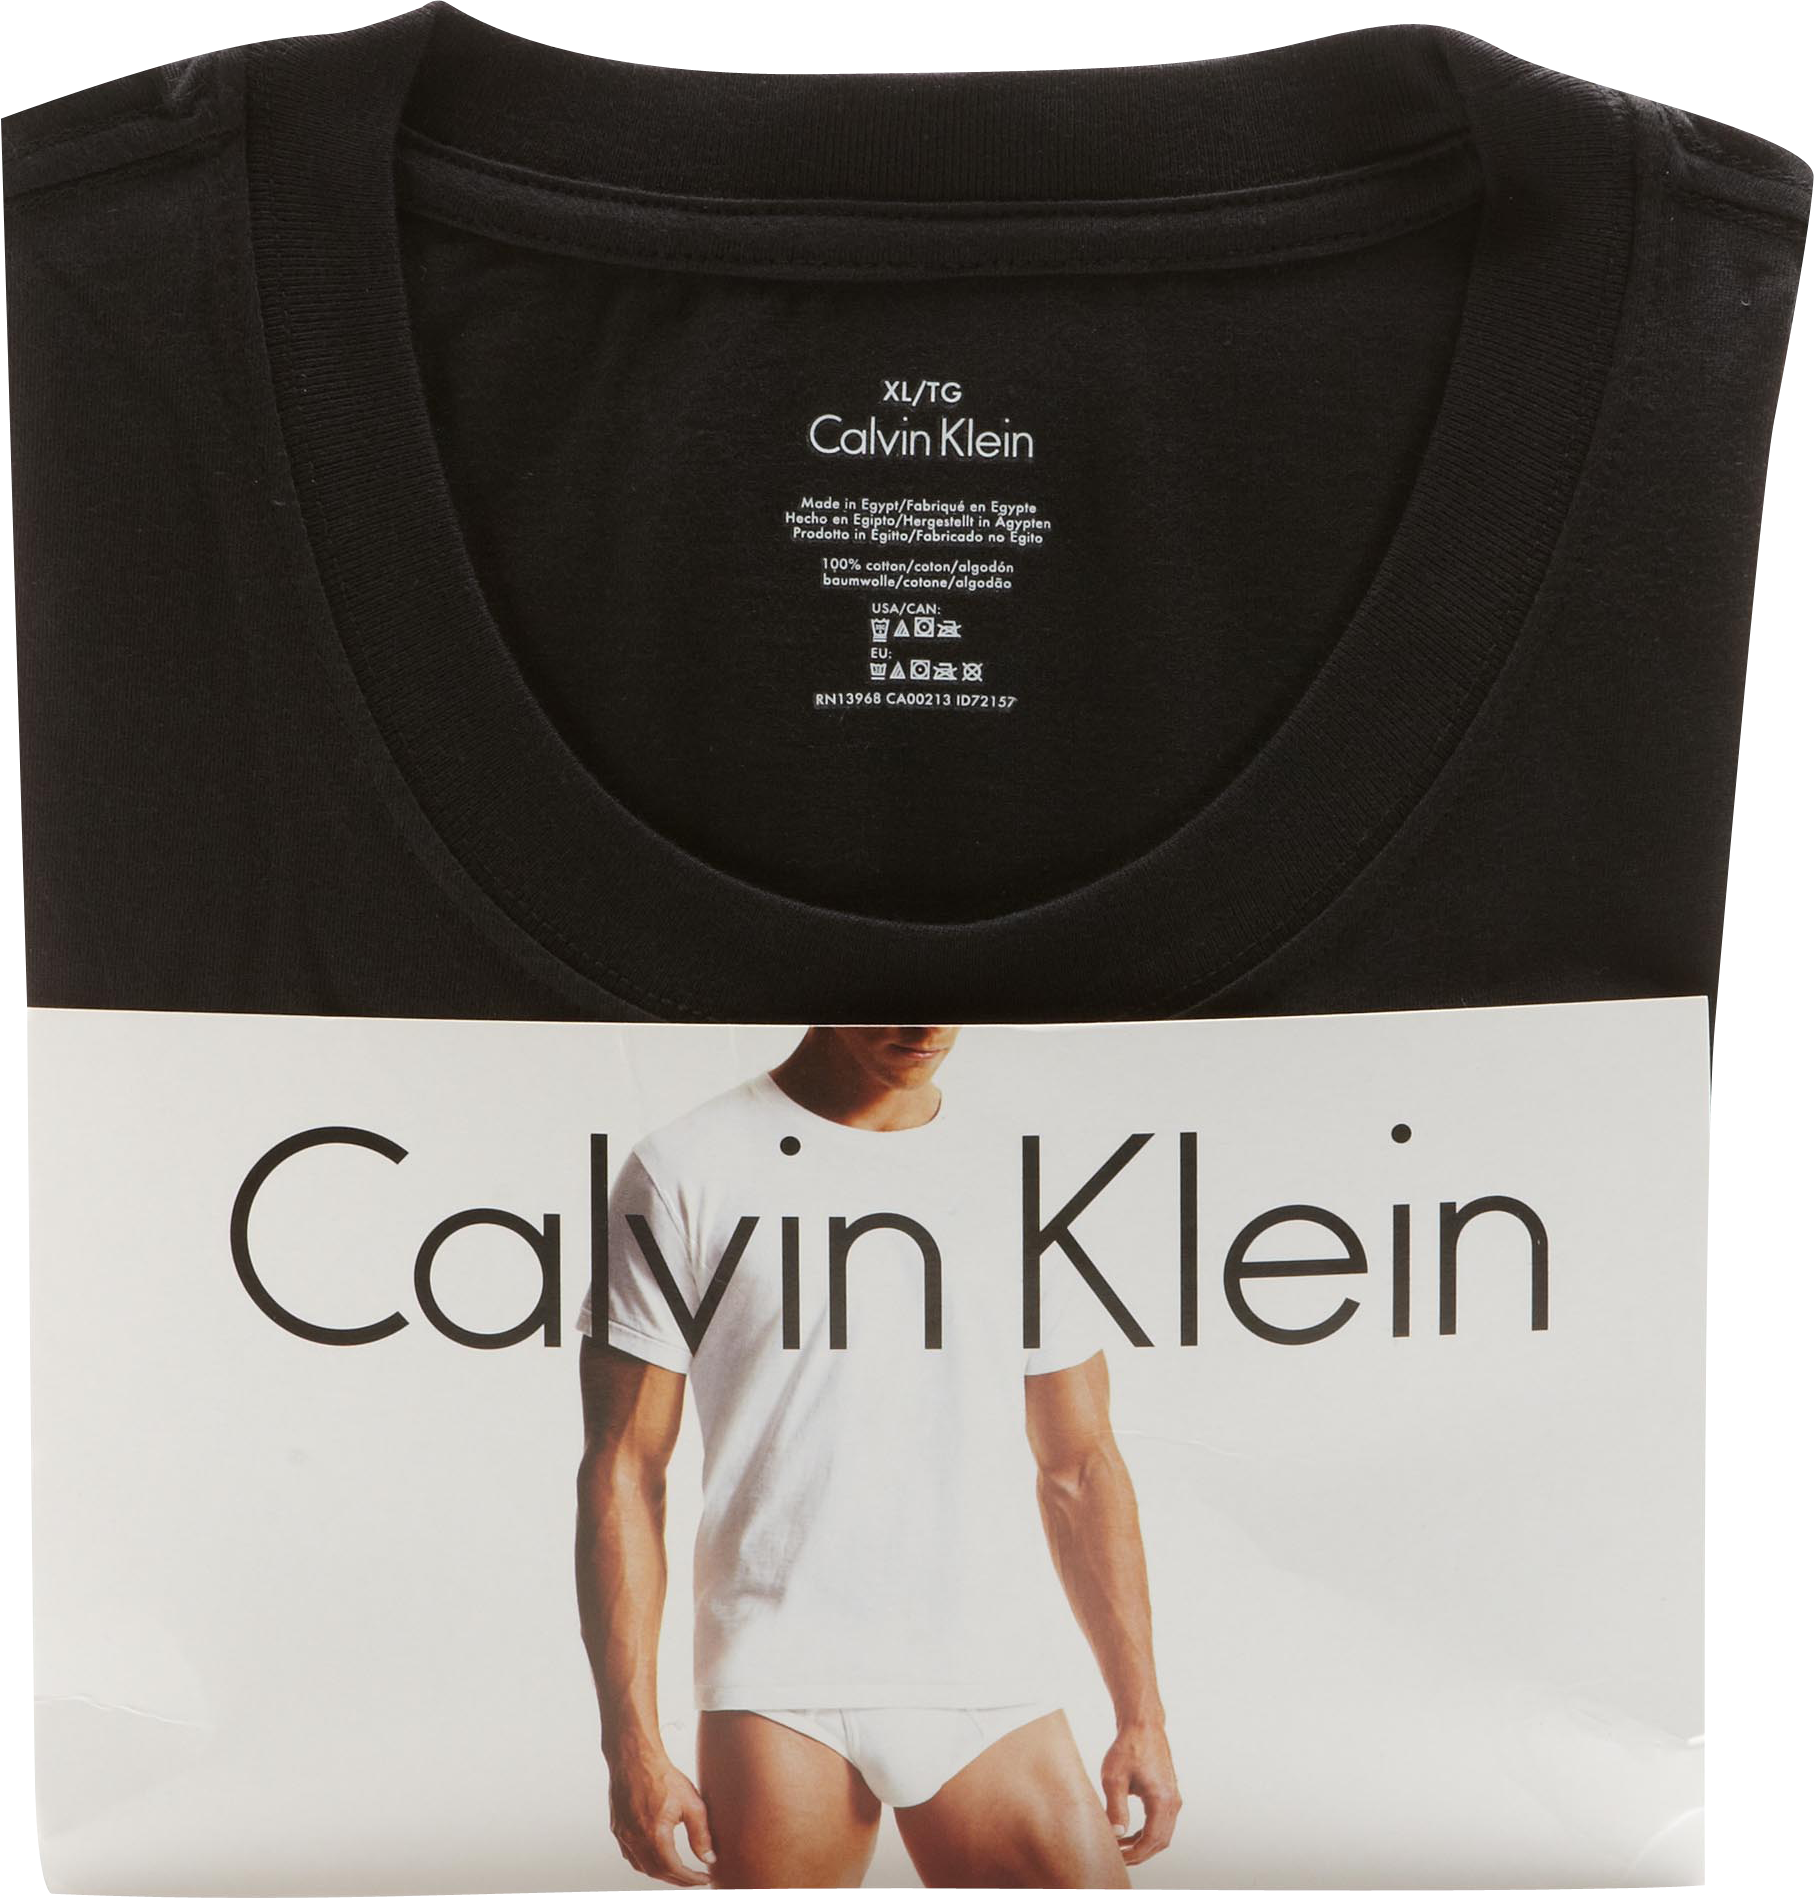 Calvin Klein Black Slim-Fit Crewneck T-Shirts (Three-Pack) - Men's Sale |  Men's Wearhouse